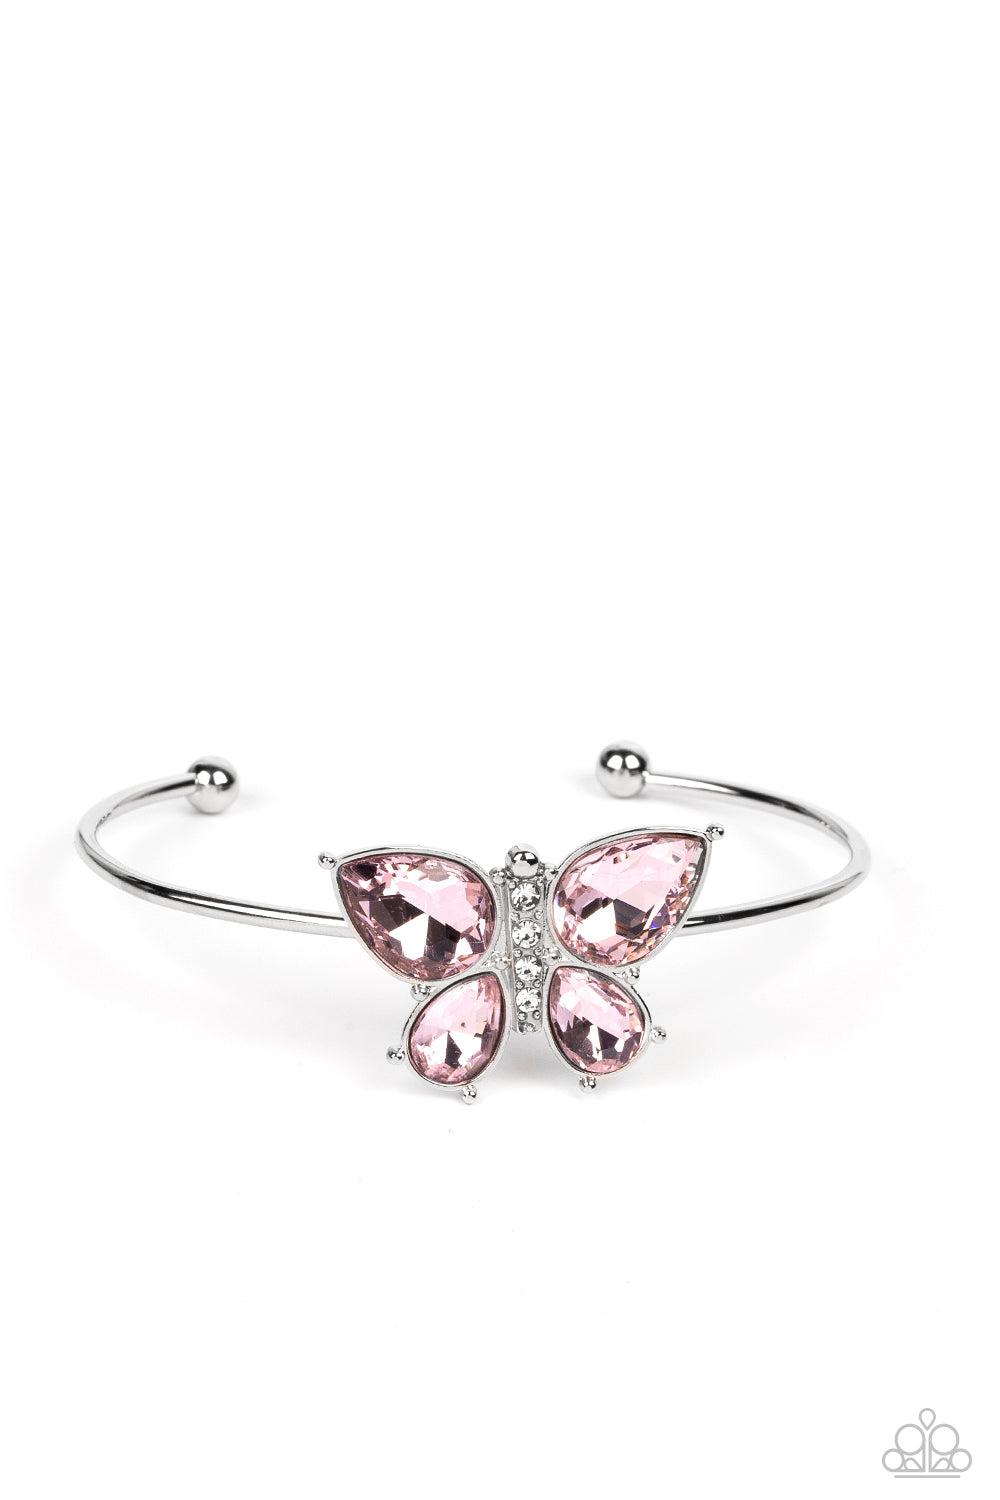 Butterfly Beatitude Pink Rhinestone Butterfly Cuff Bracelet - Paparazzi Accessories- lightbox - CarasShop.com - $5 Jewelry by Cara Jewels